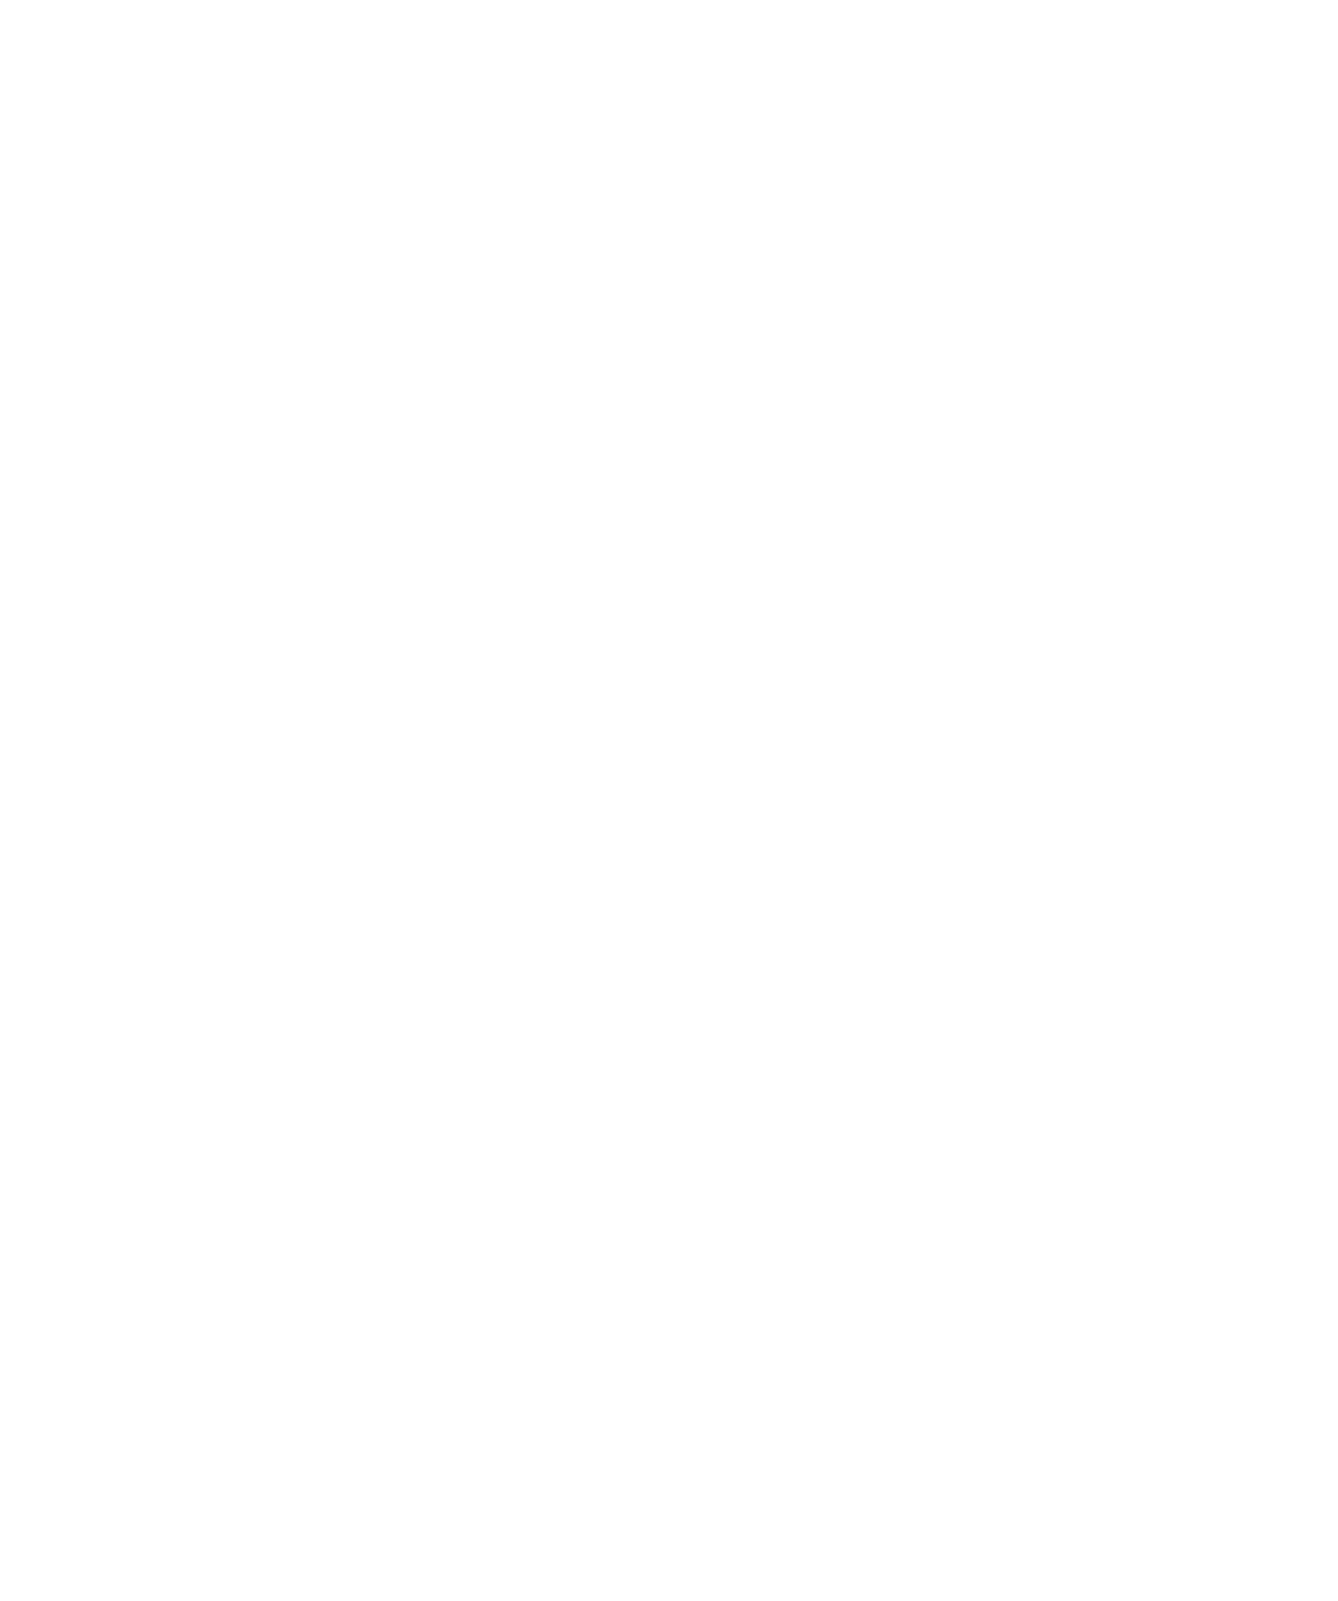 Centrais Electricas Brasileiras Logo für dunkle Hintergründe (transparentes PNG)